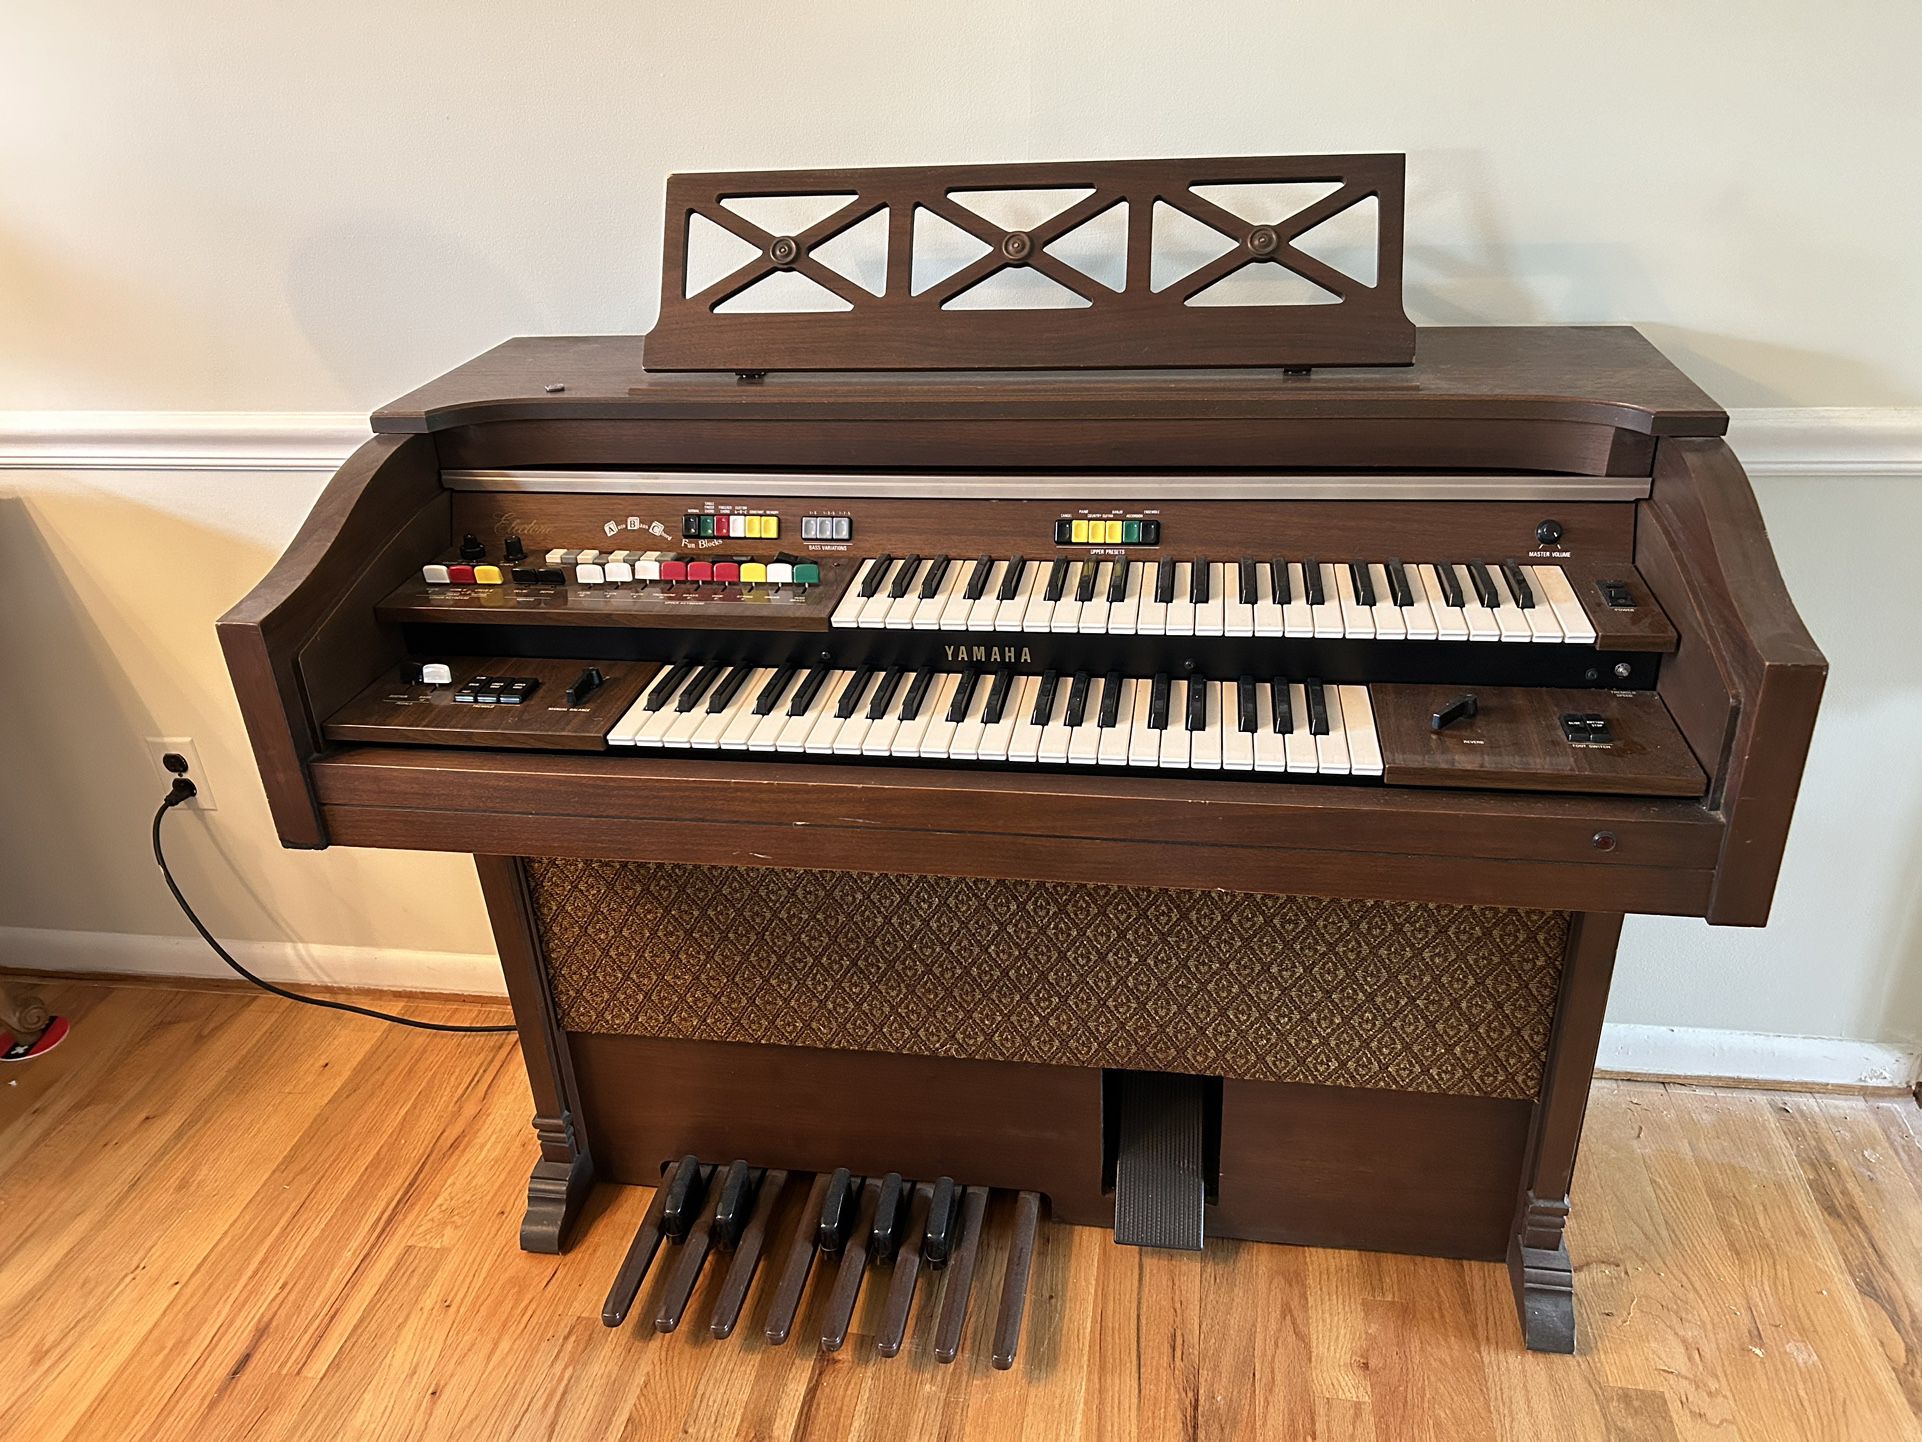 Never Used 1940s Piano Organ!